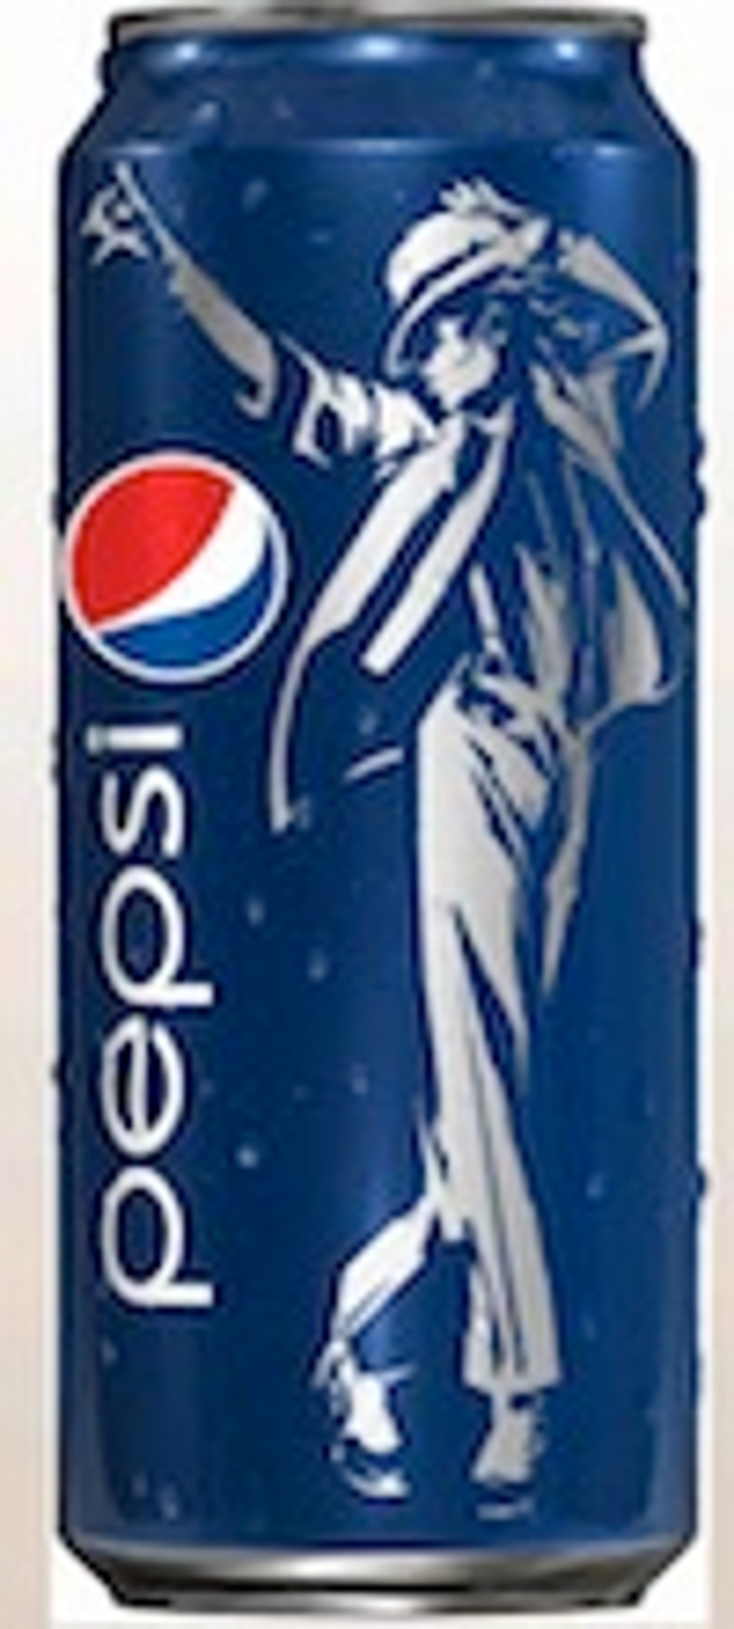 TJLG Announces New PepsiCo Deals